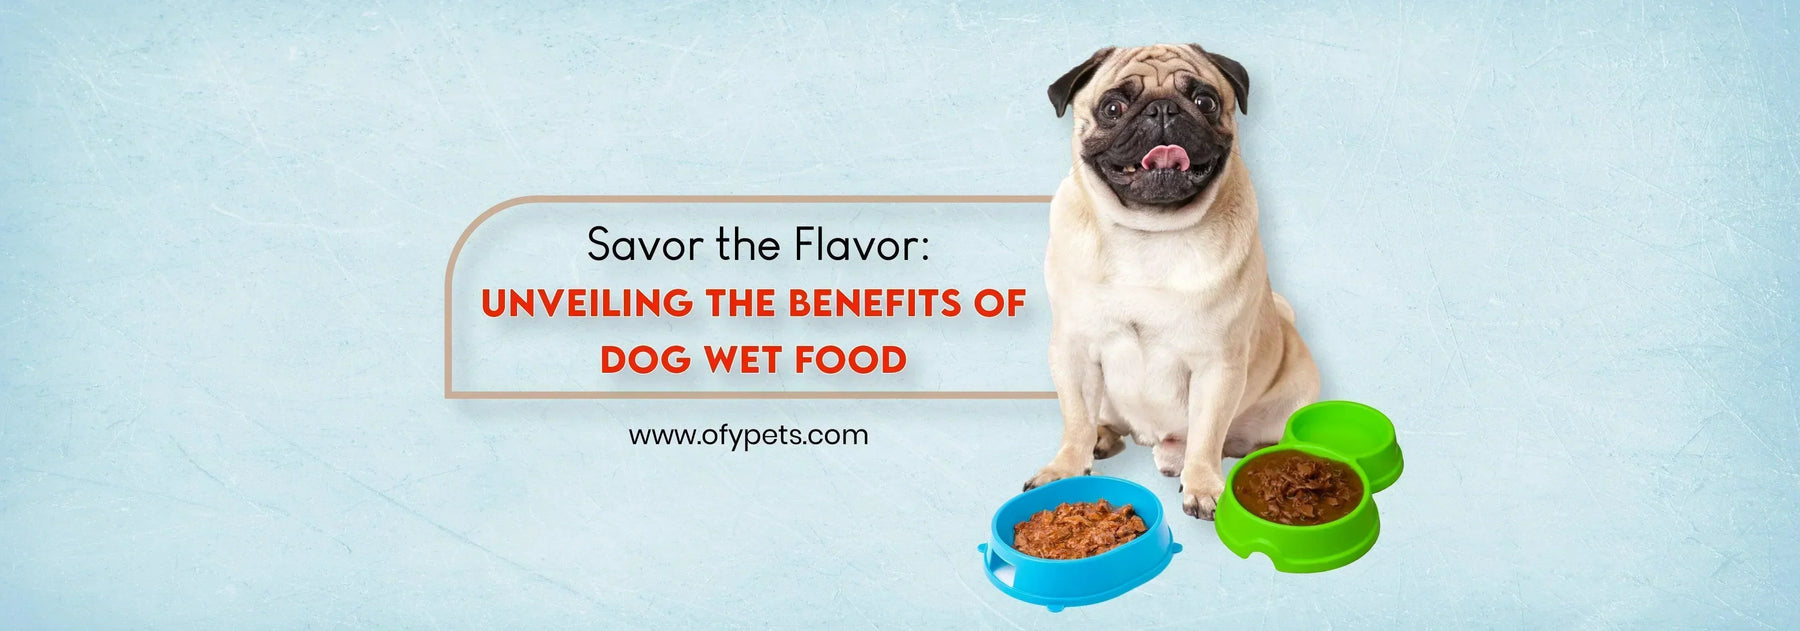 Savor the Flavor: Unveiling the Benefits of Dog Wet Food - Ofypets